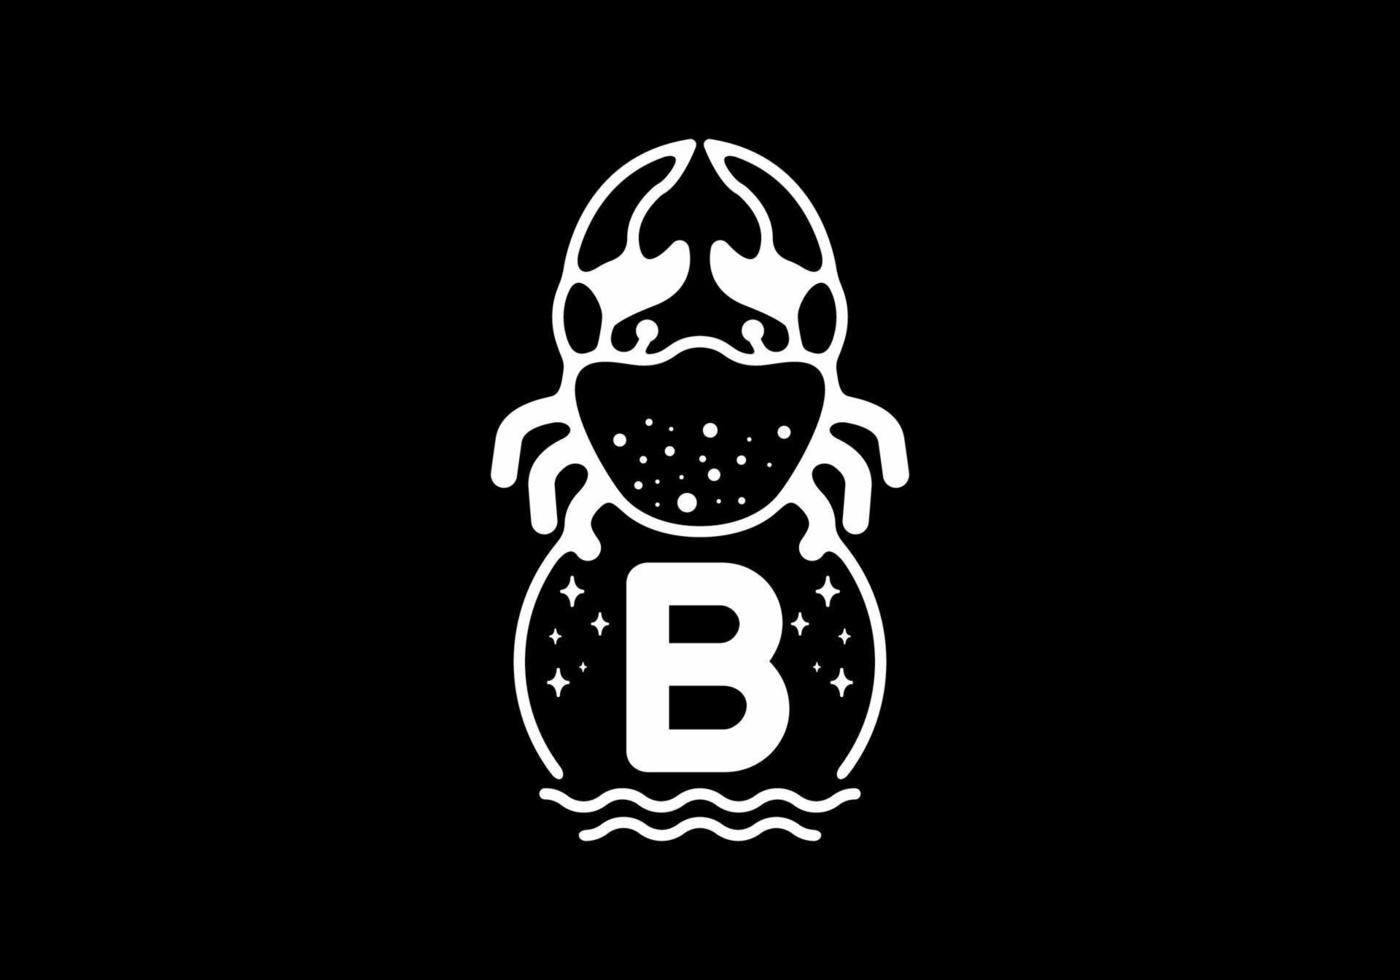 vit svart krabba streckteckning med b initial bokstav vektor